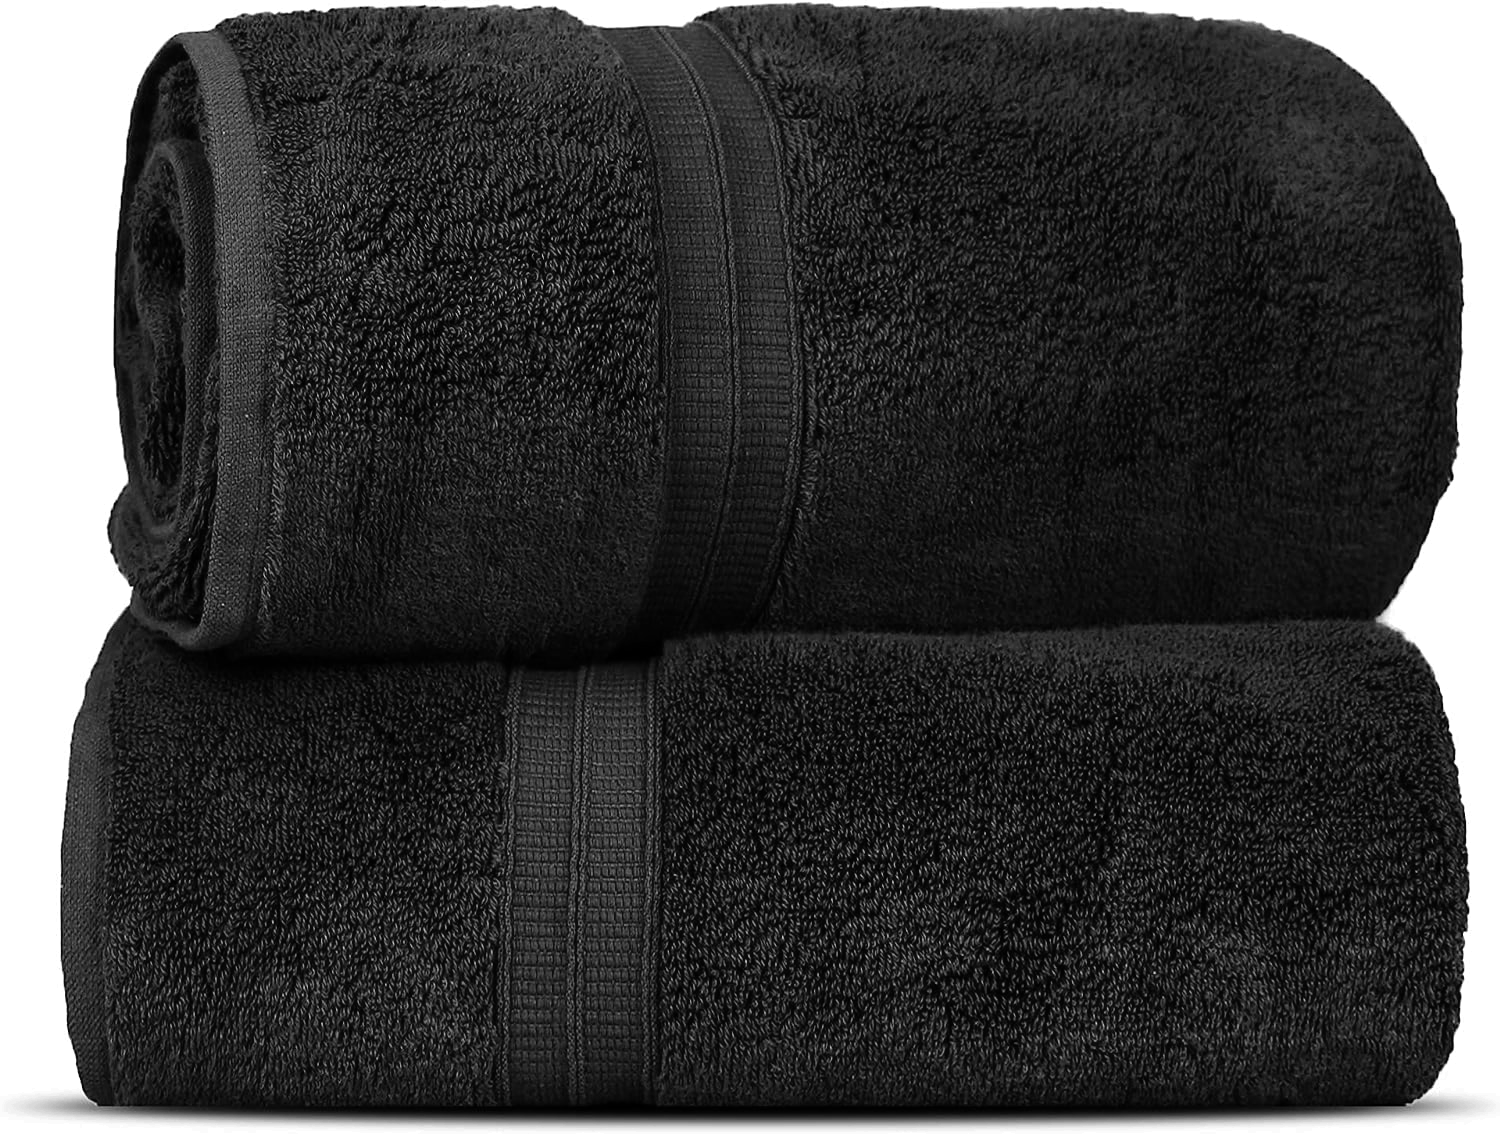 4X Large Super Jumbo Bath Sheet 100% Luxury Soft Big XL Bathroom Towel